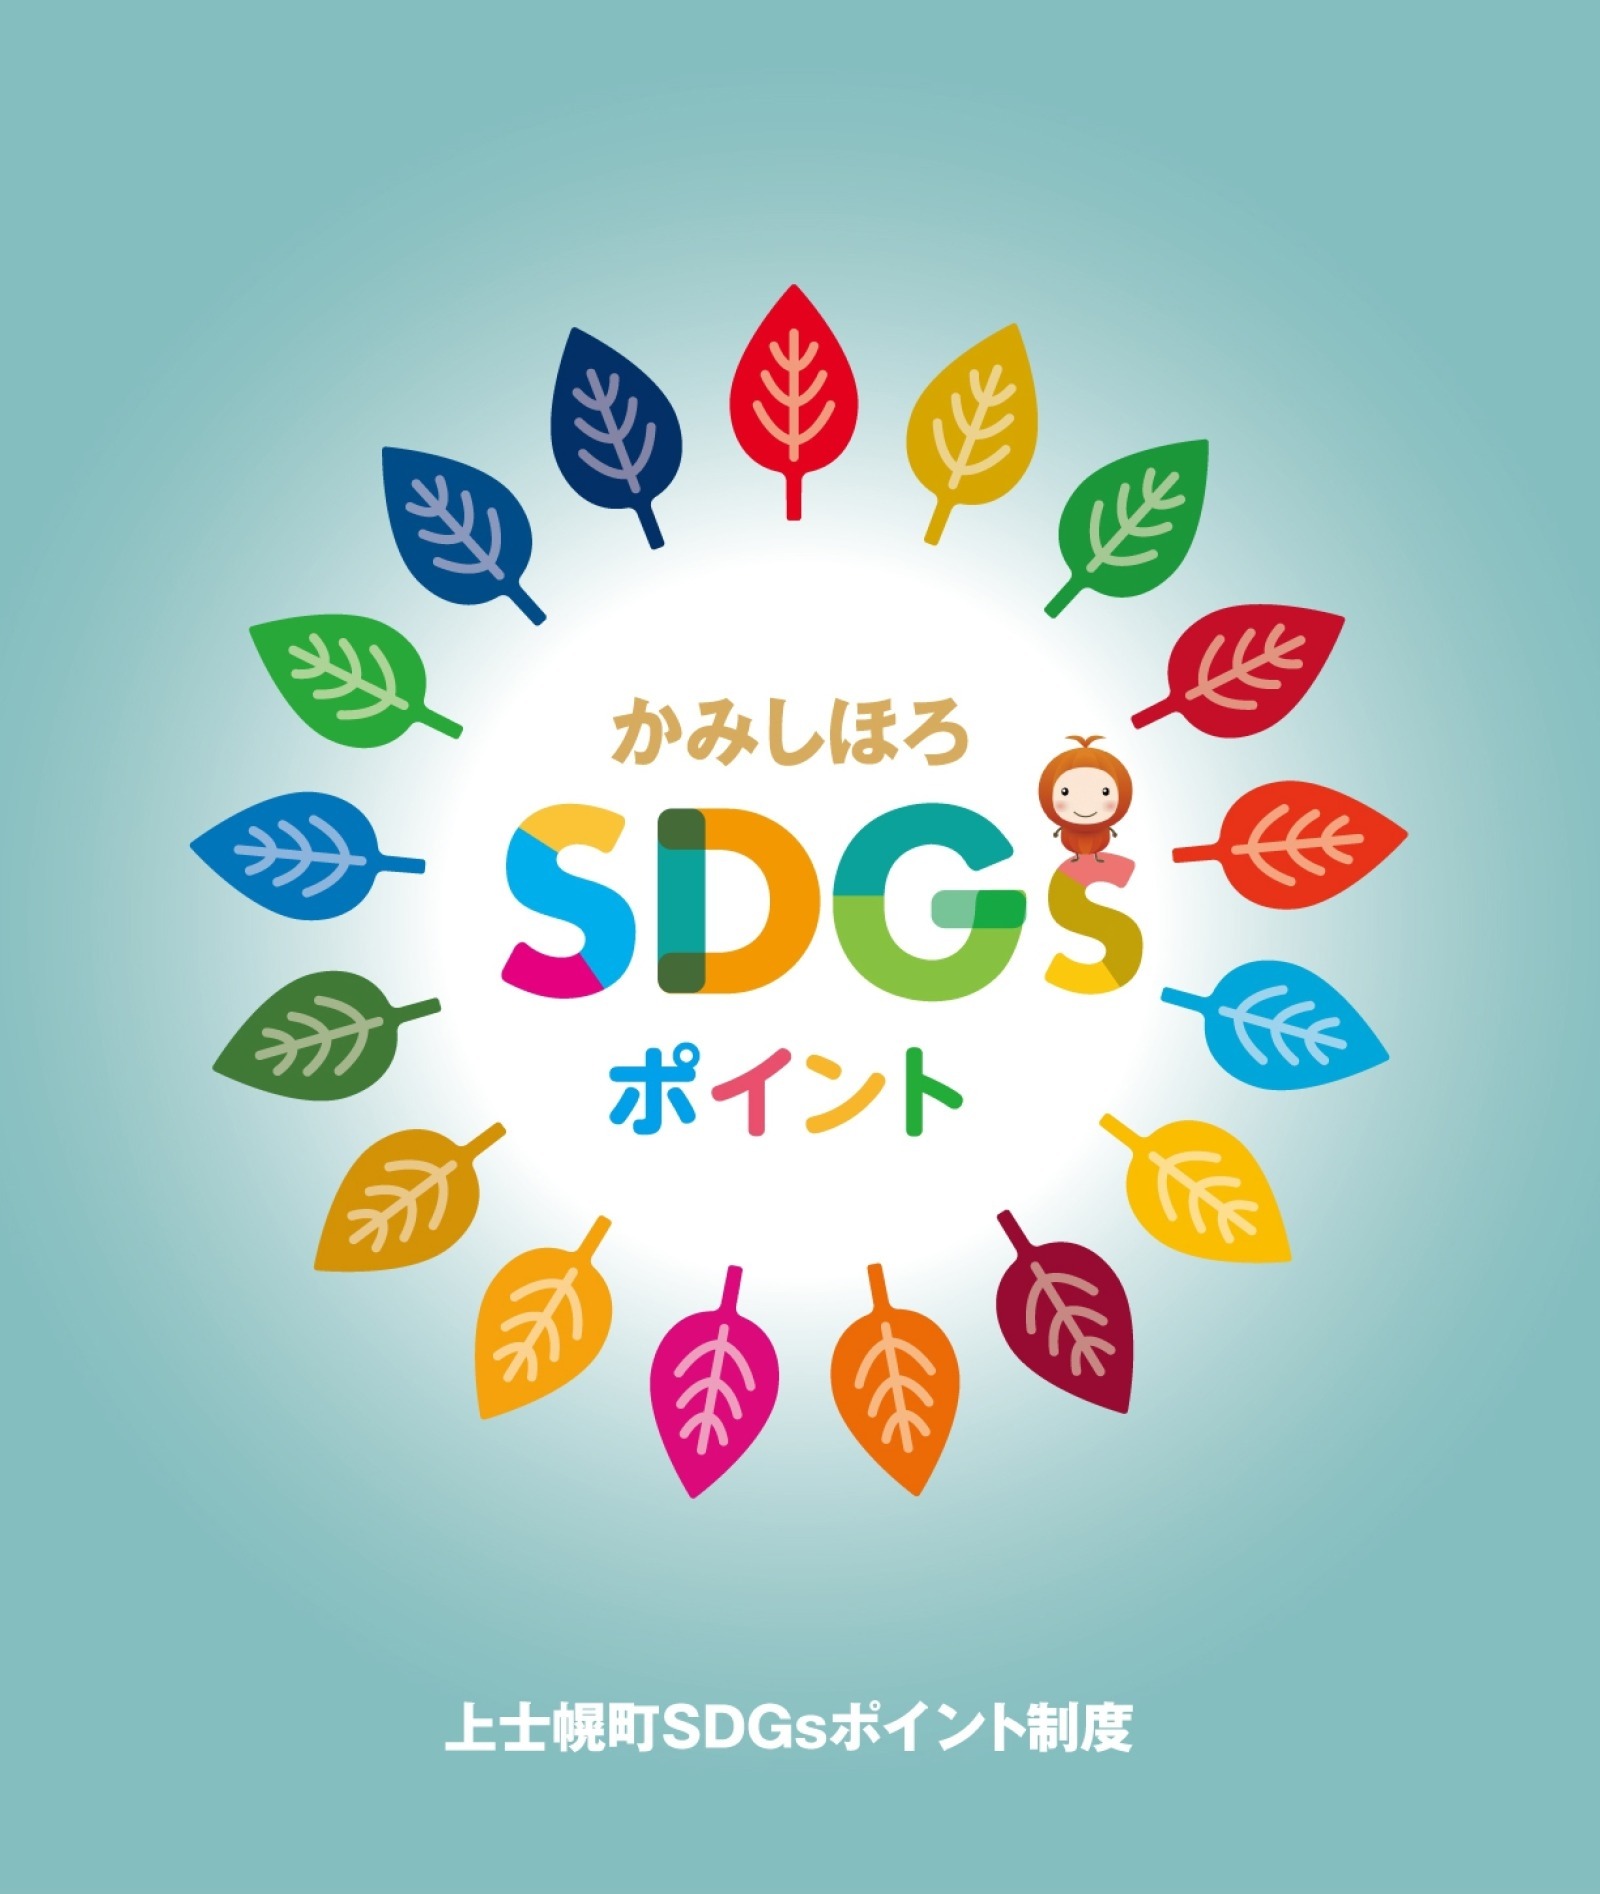 SDGsポイント進呈メニューを更新しましたの画像